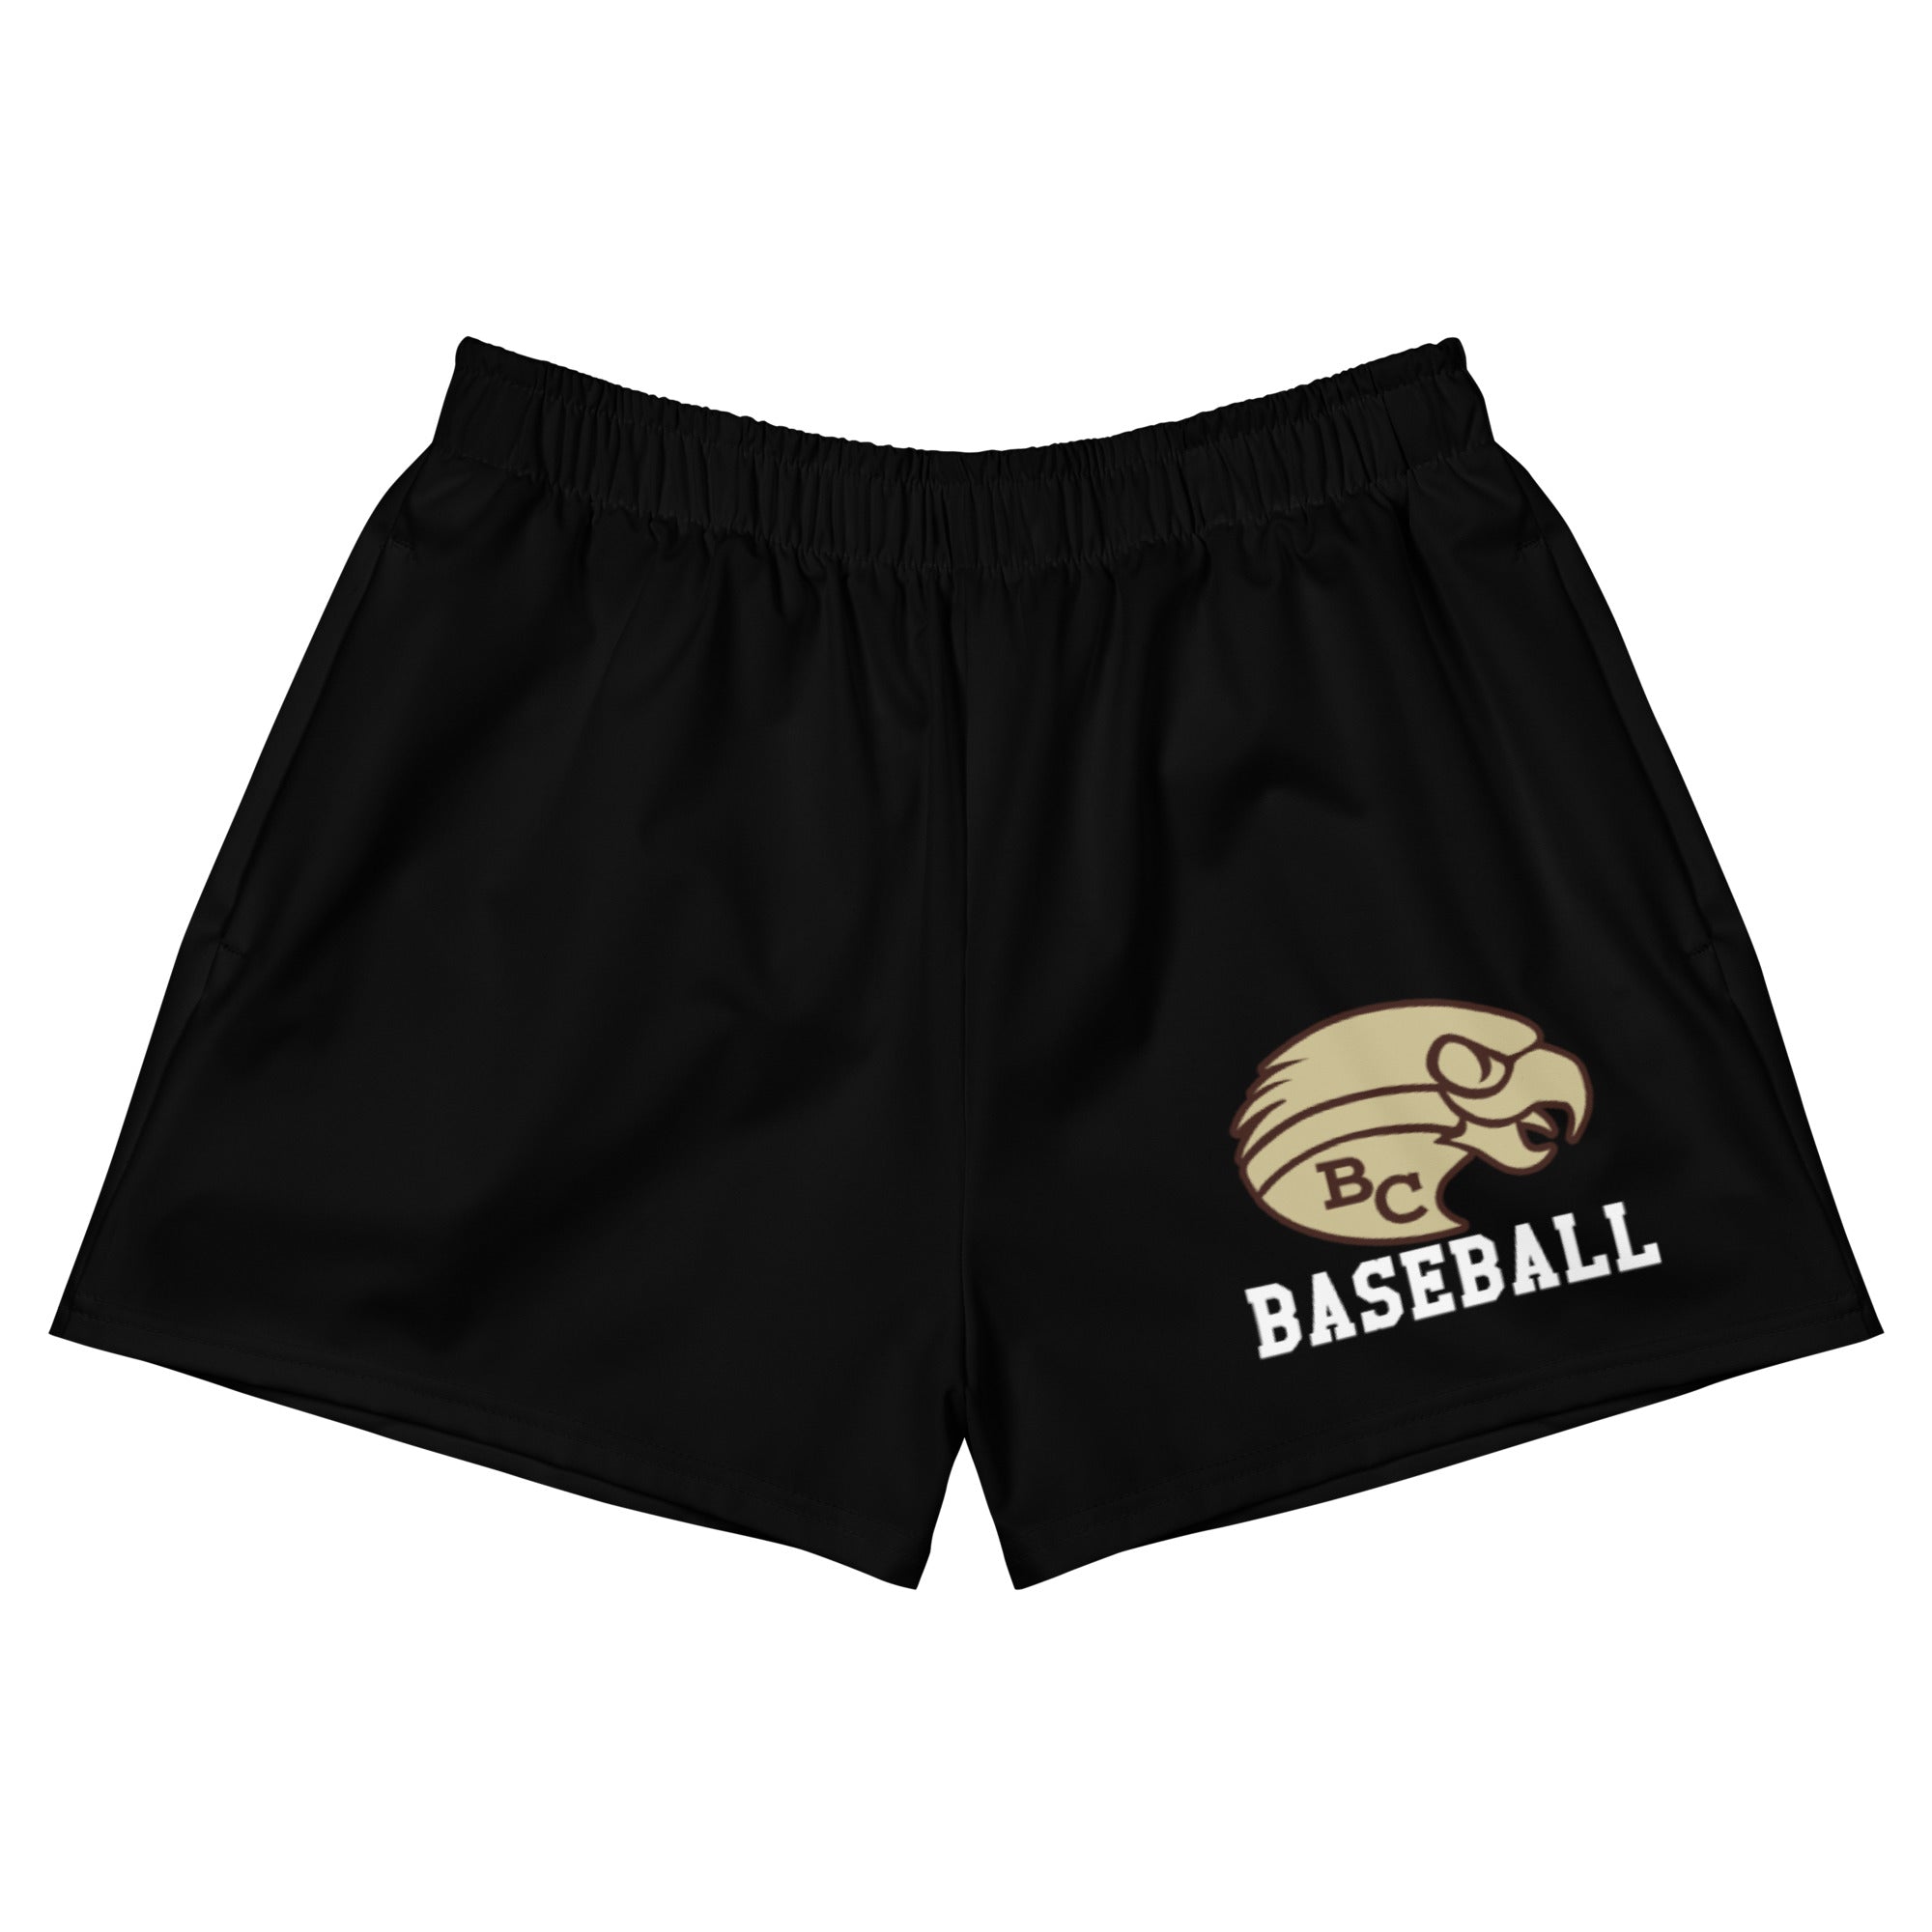 Beca Baseball Women's Recycled Athletic Shorts